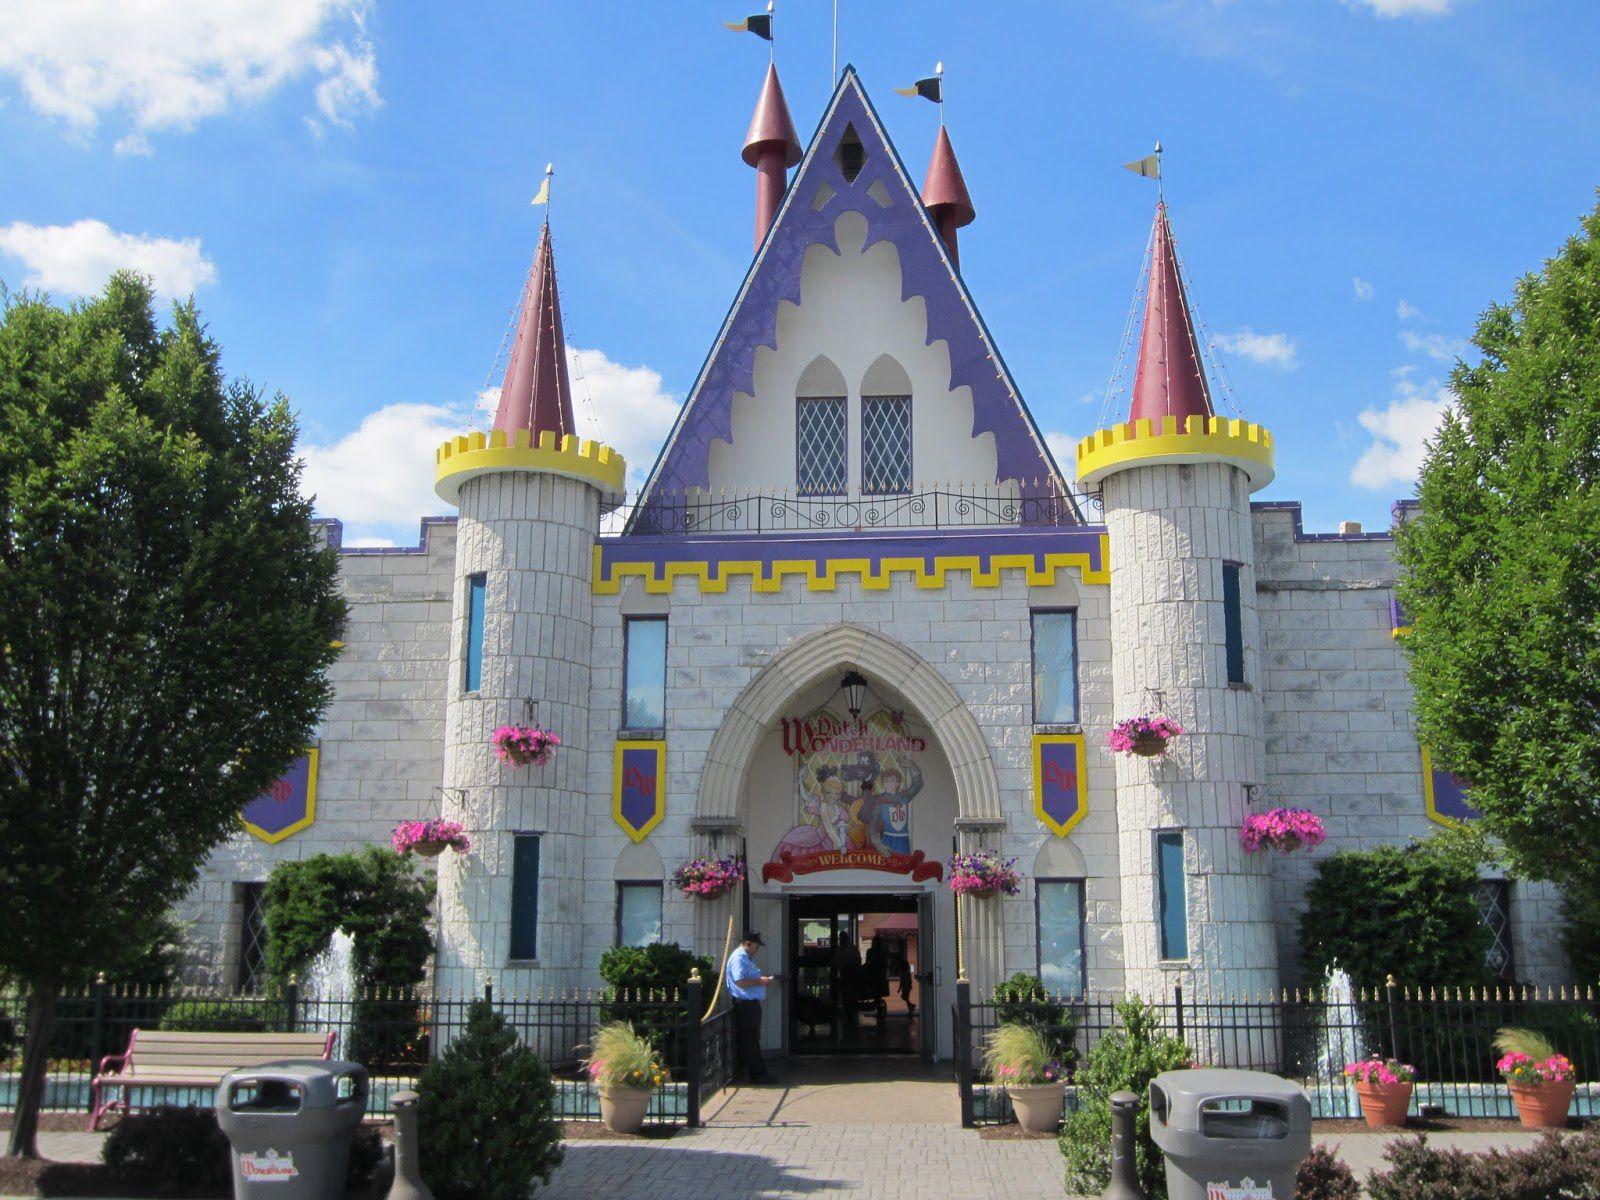 Dutch Wonderland amusement park opens castle doors daily beginning this